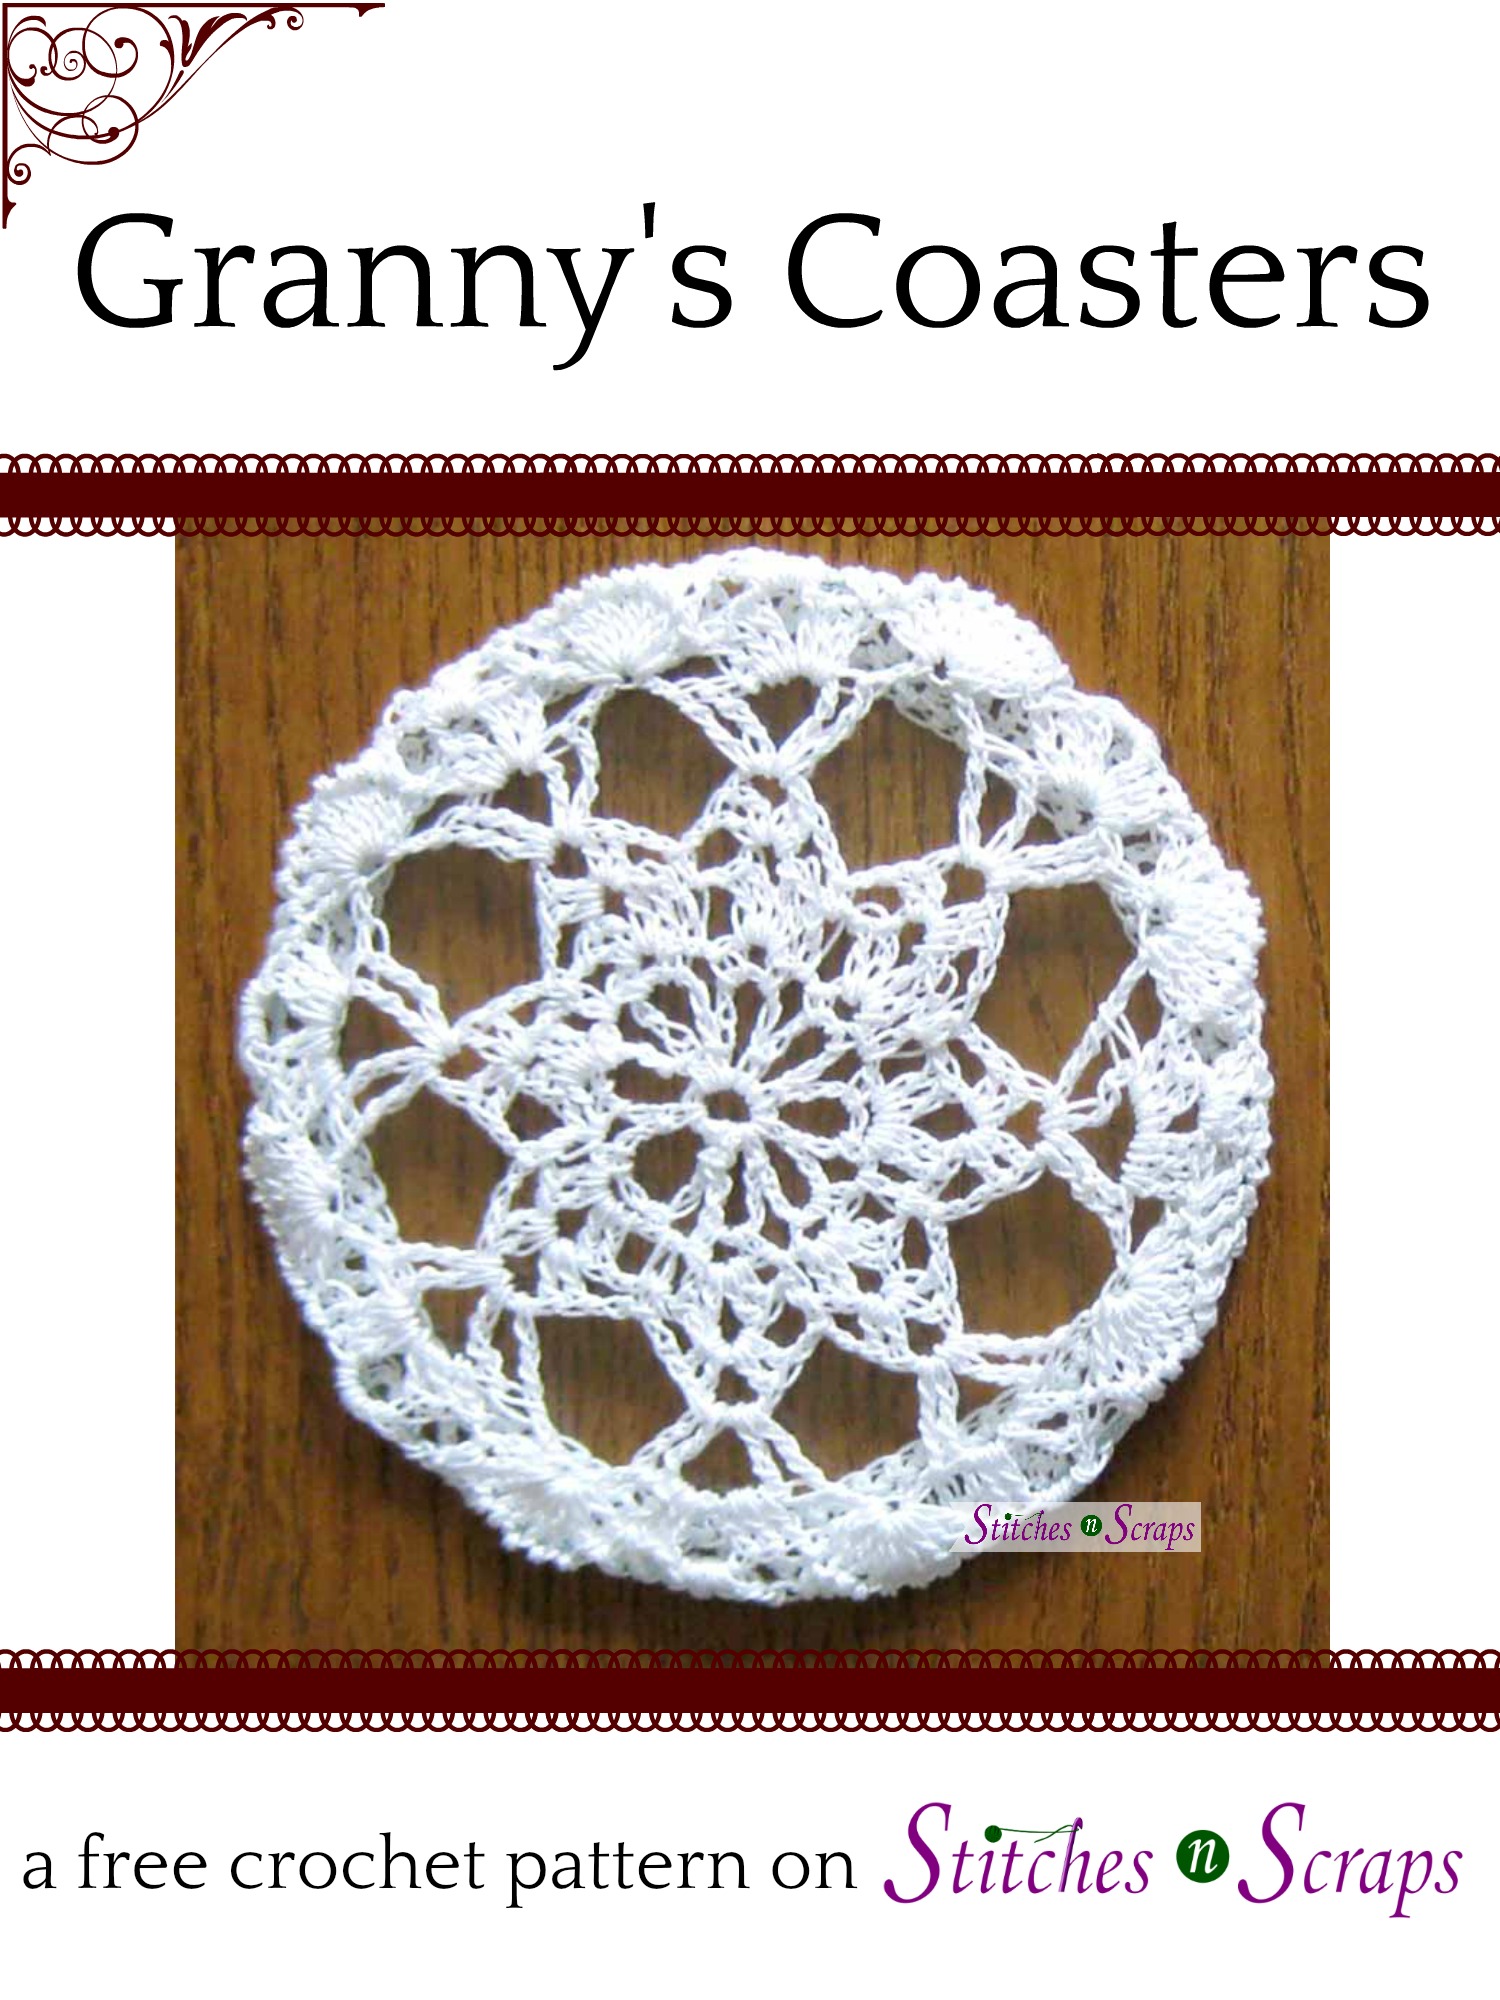 Granny's Coasters, a free crochet pattern on StitchesnScraps.com